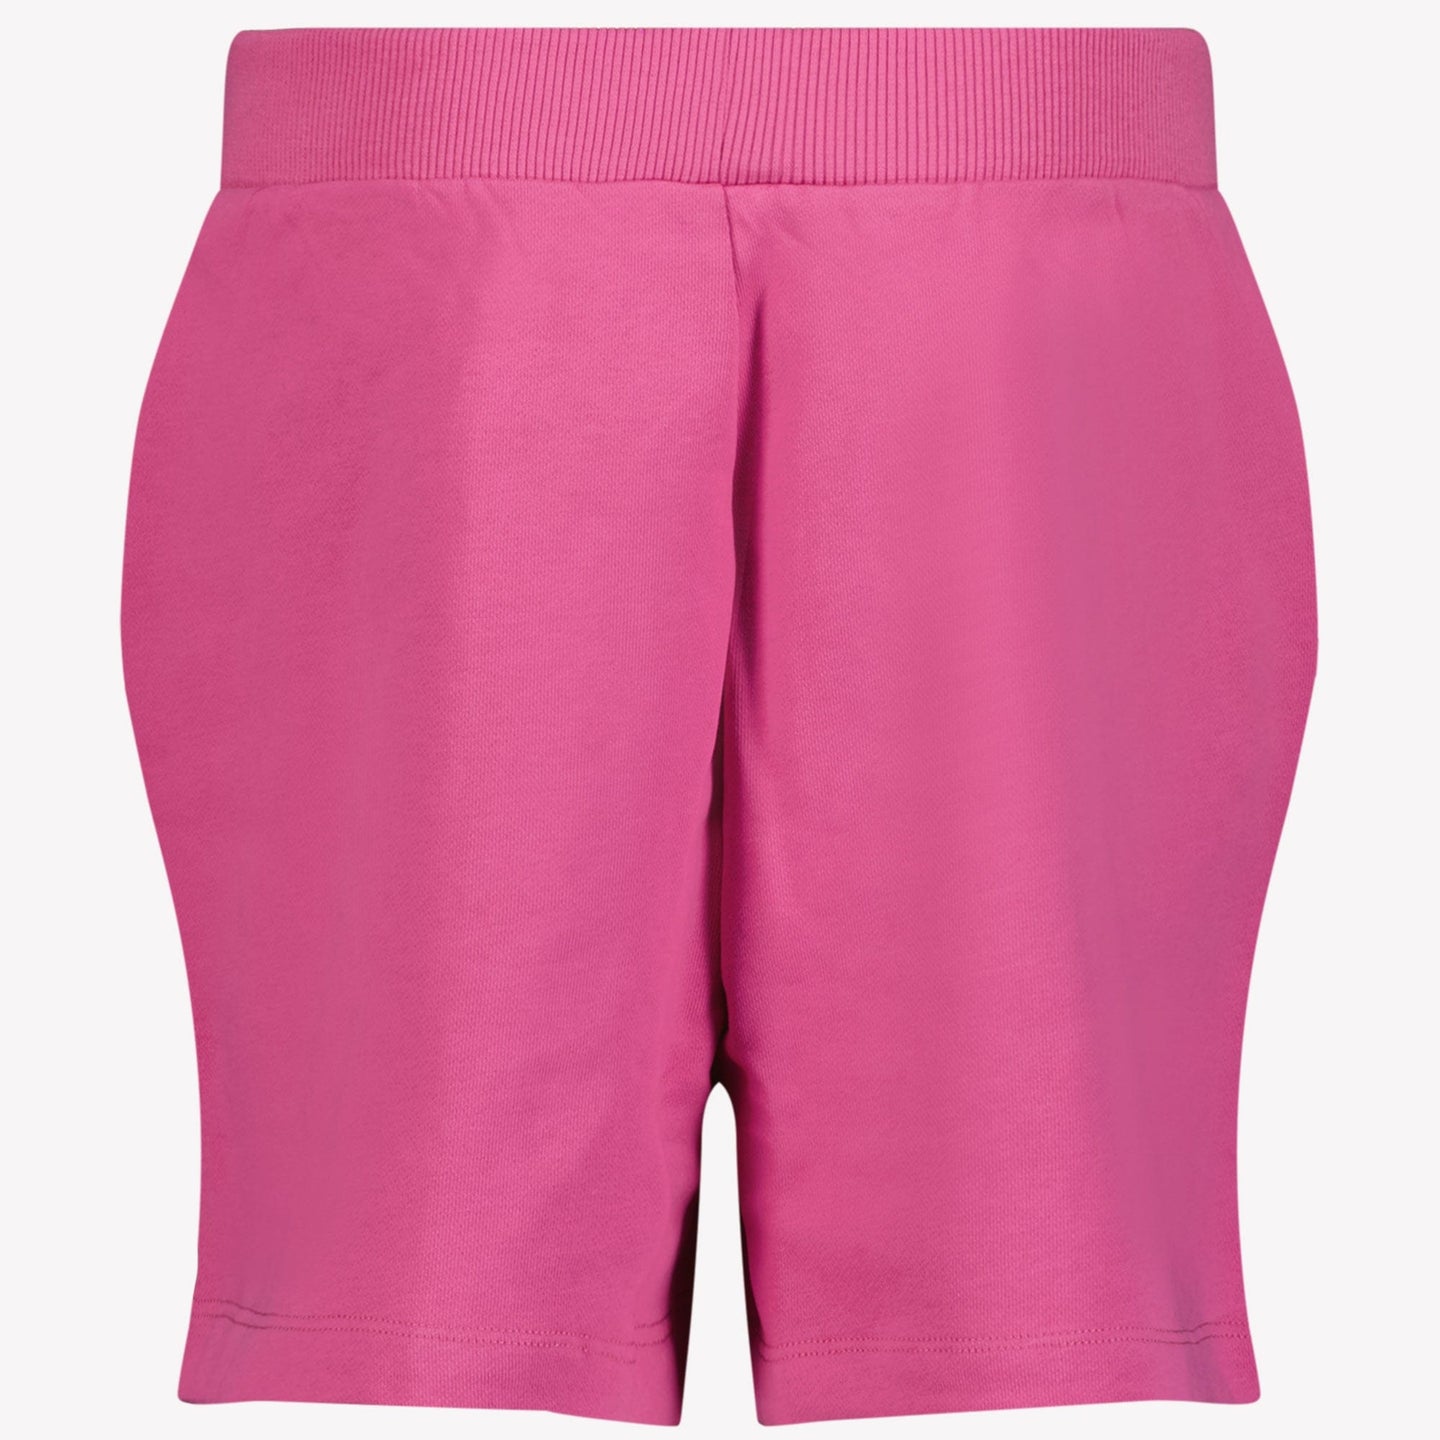 Balmain Piger shorts fuchsia